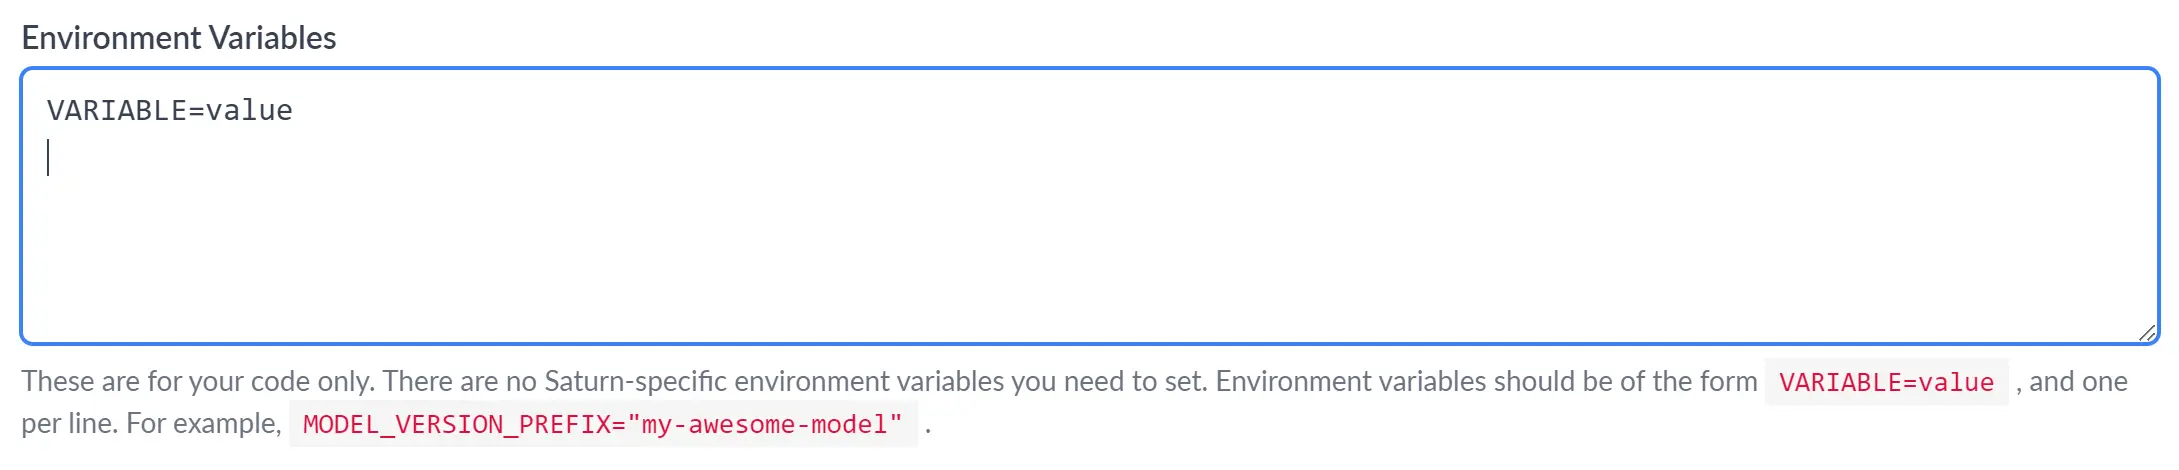 Environment variables UI